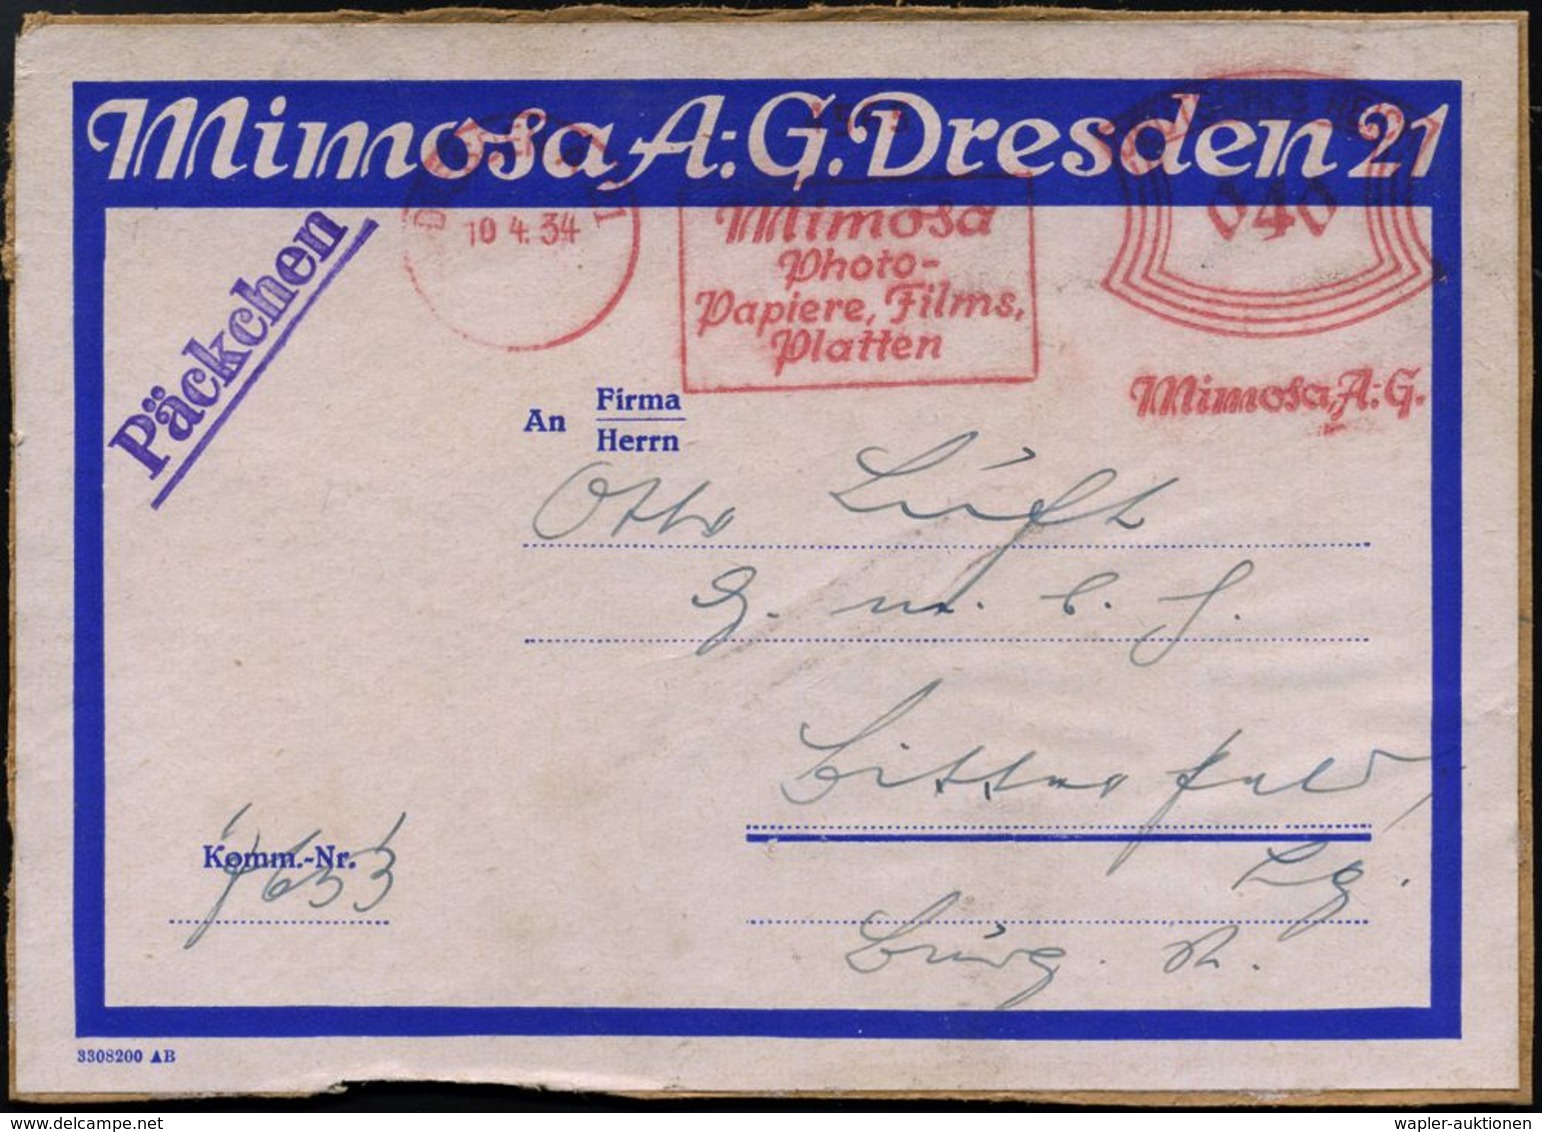 FOTOGRAFIE / KAMERAS / FOTOINDUSTRIE : DRESDEN A 21/ Mimosa/ Photo-/ Papiere,Films/ Platten.. 1934 (10.4.) AFS 040 Pf. A - Fotografie